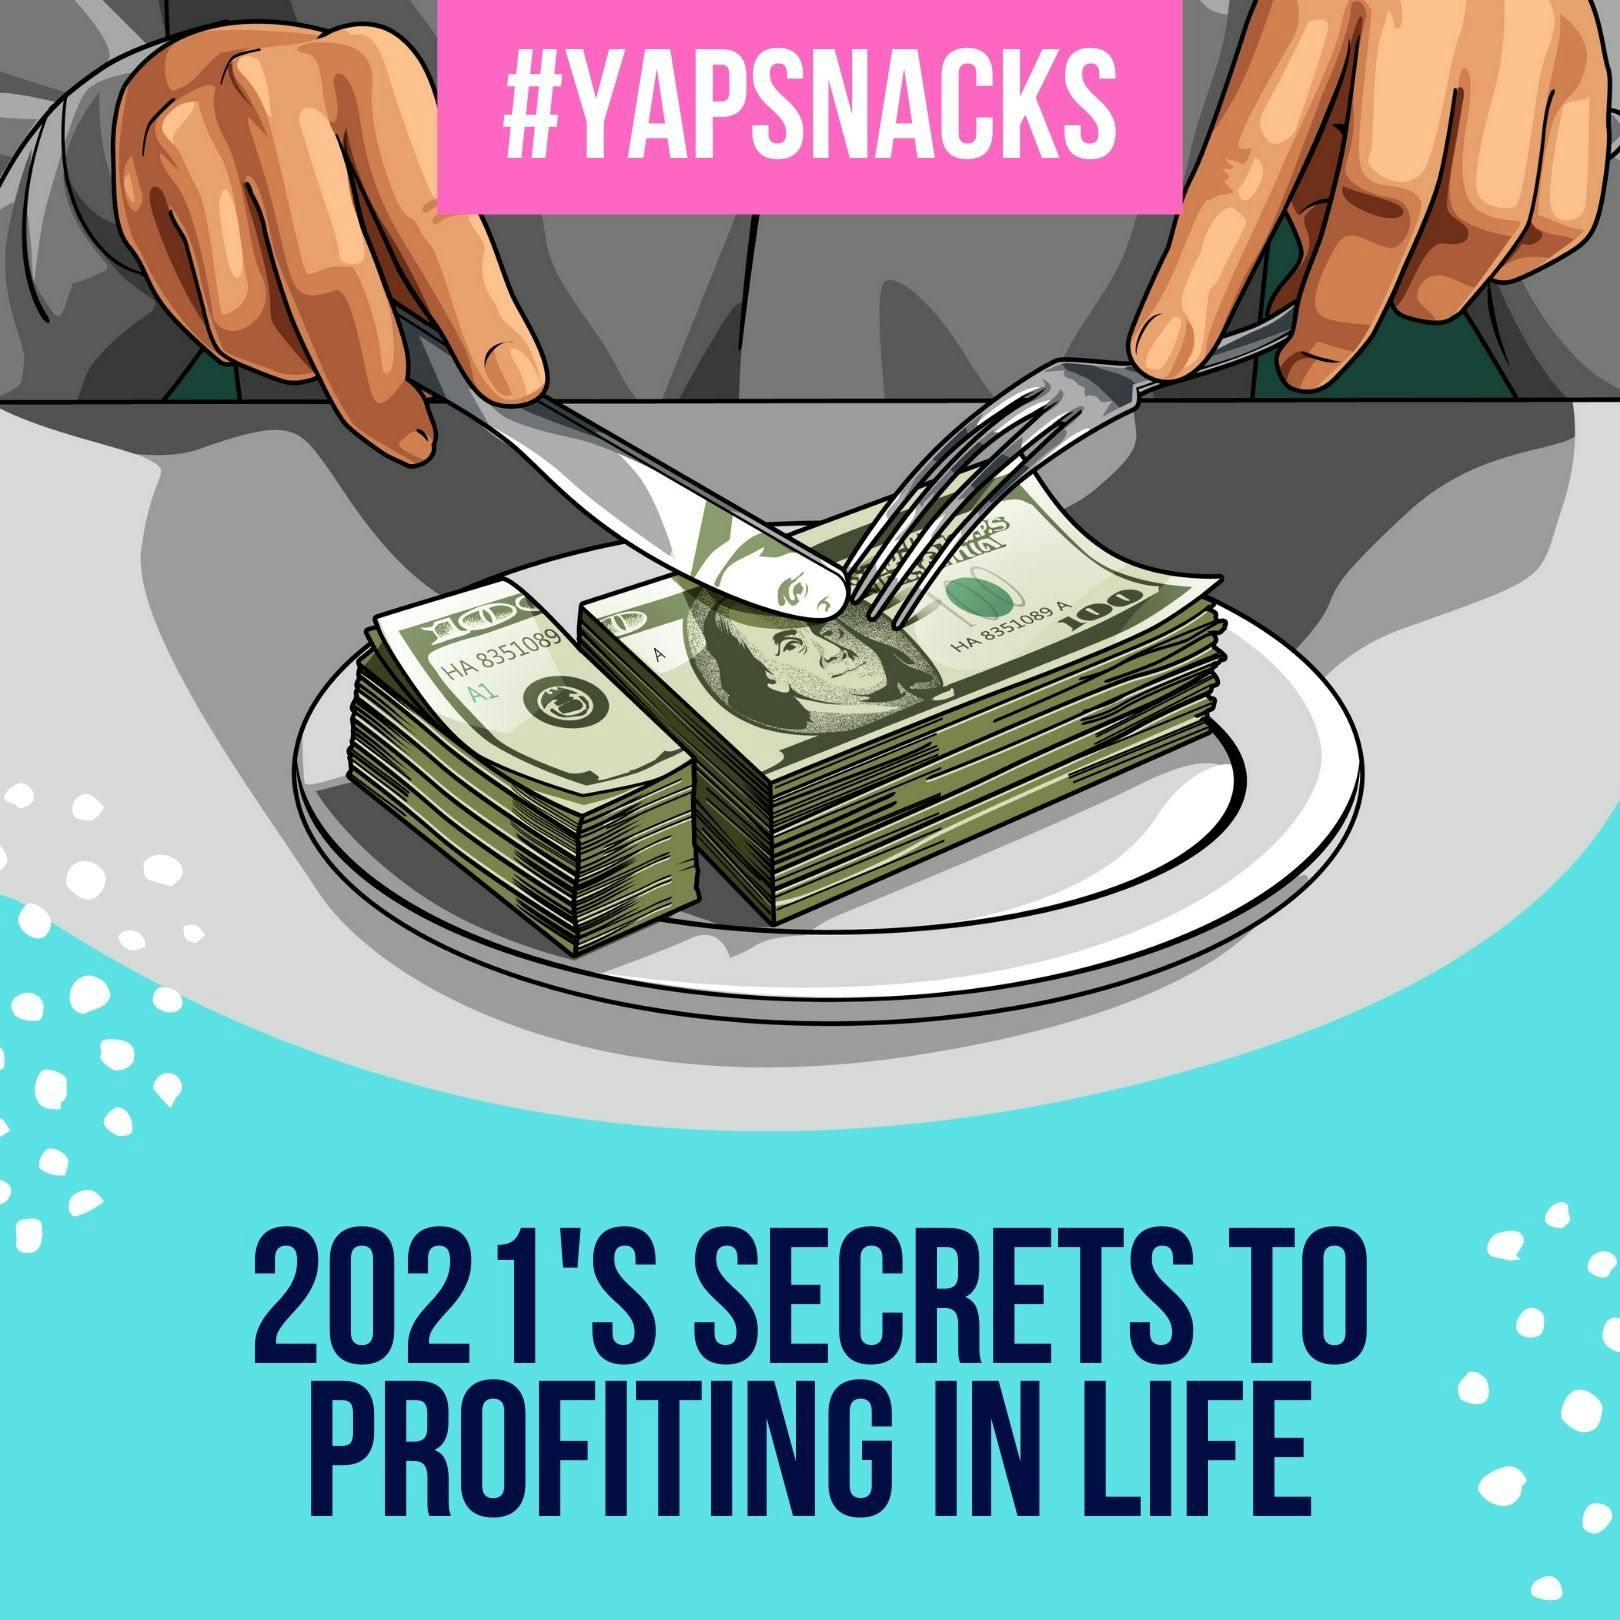 #YAPSnacks: 2021's Secrets To Profiting In Life - Purpose, Priorities and Balance (Part 1)